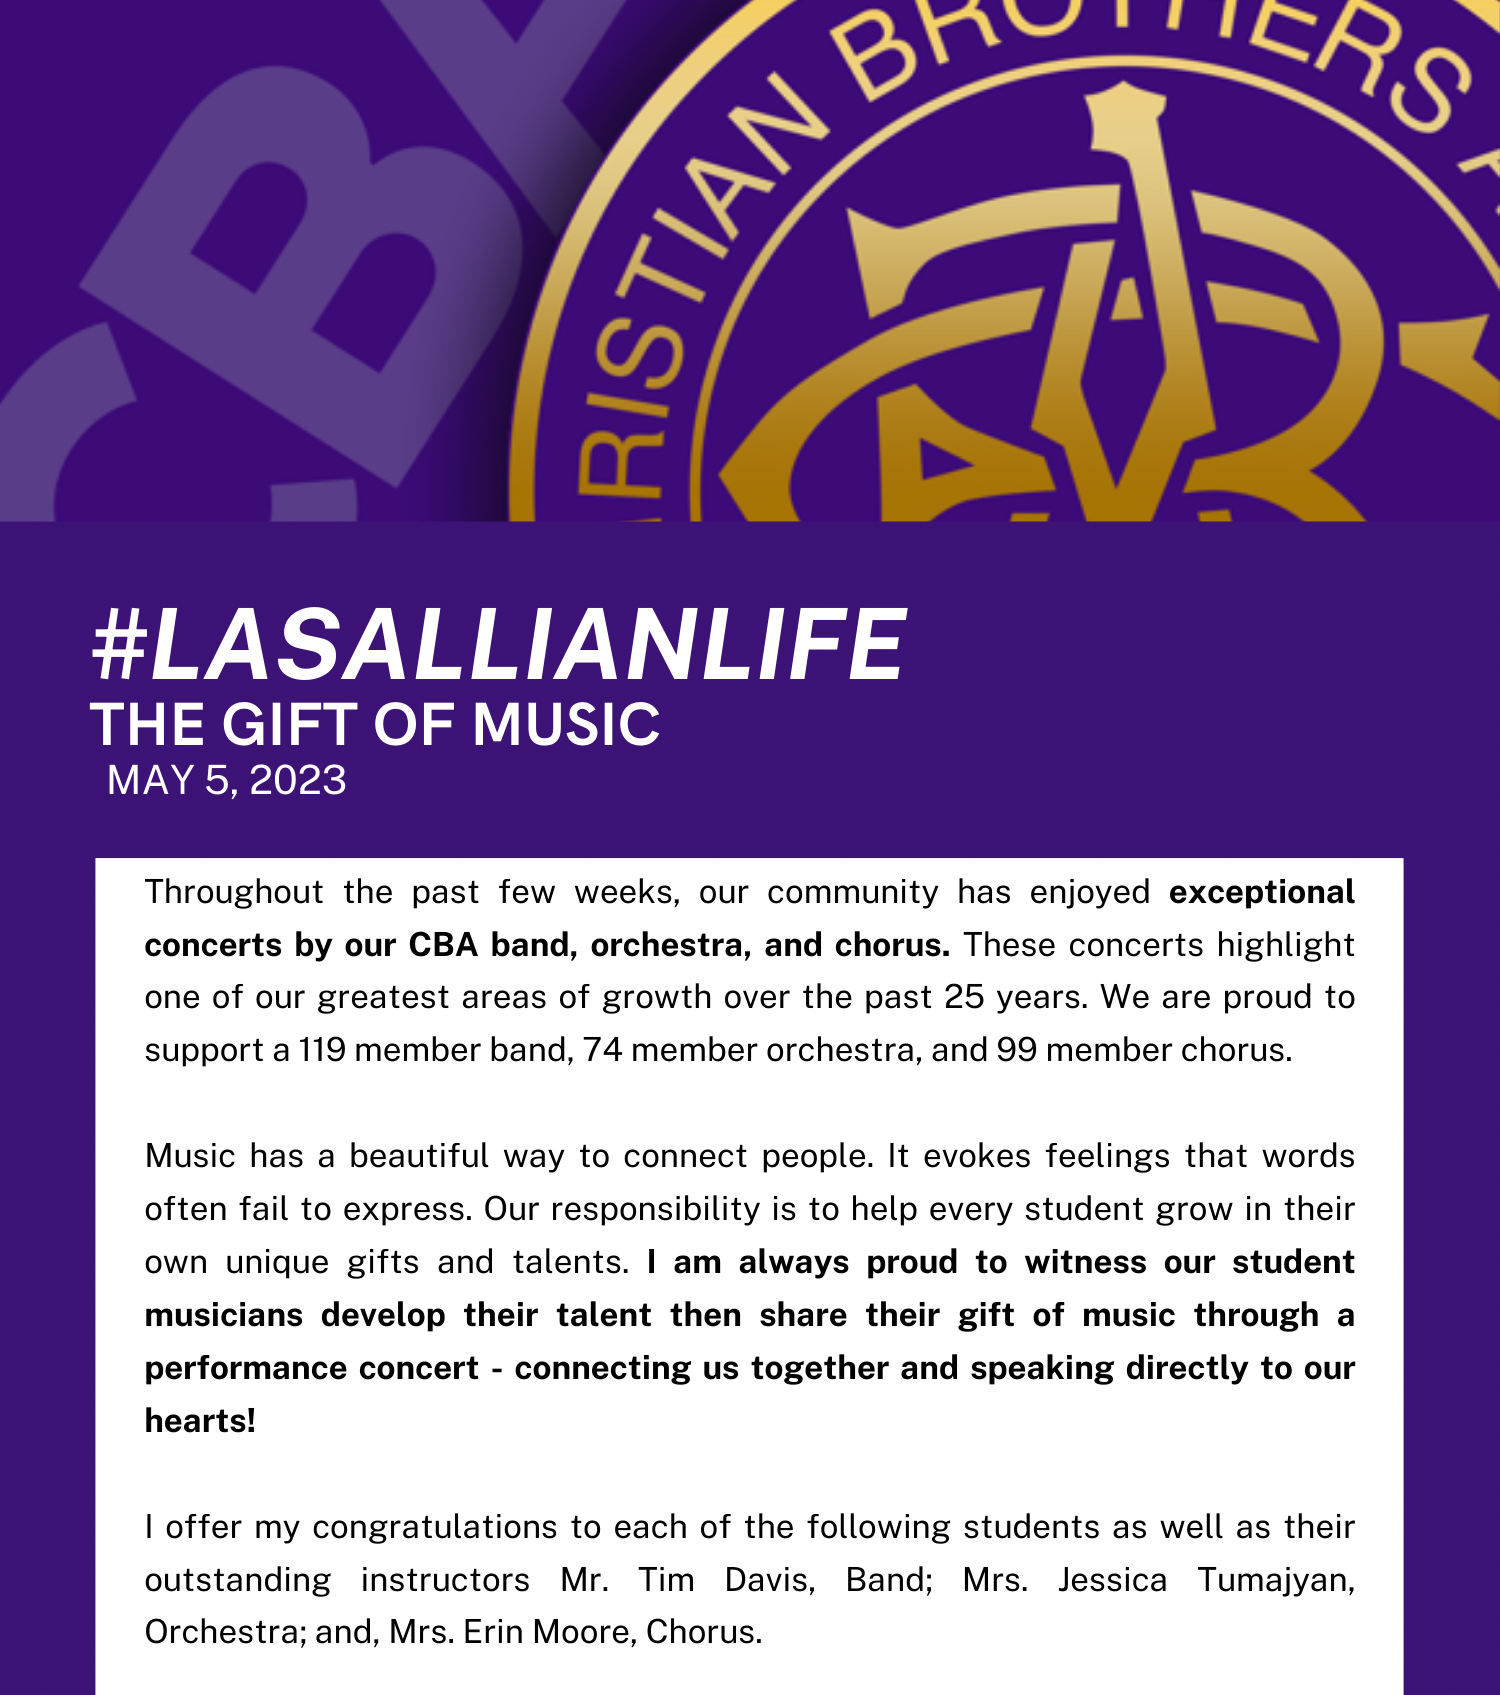 #LasallianLife : The Gift of Music